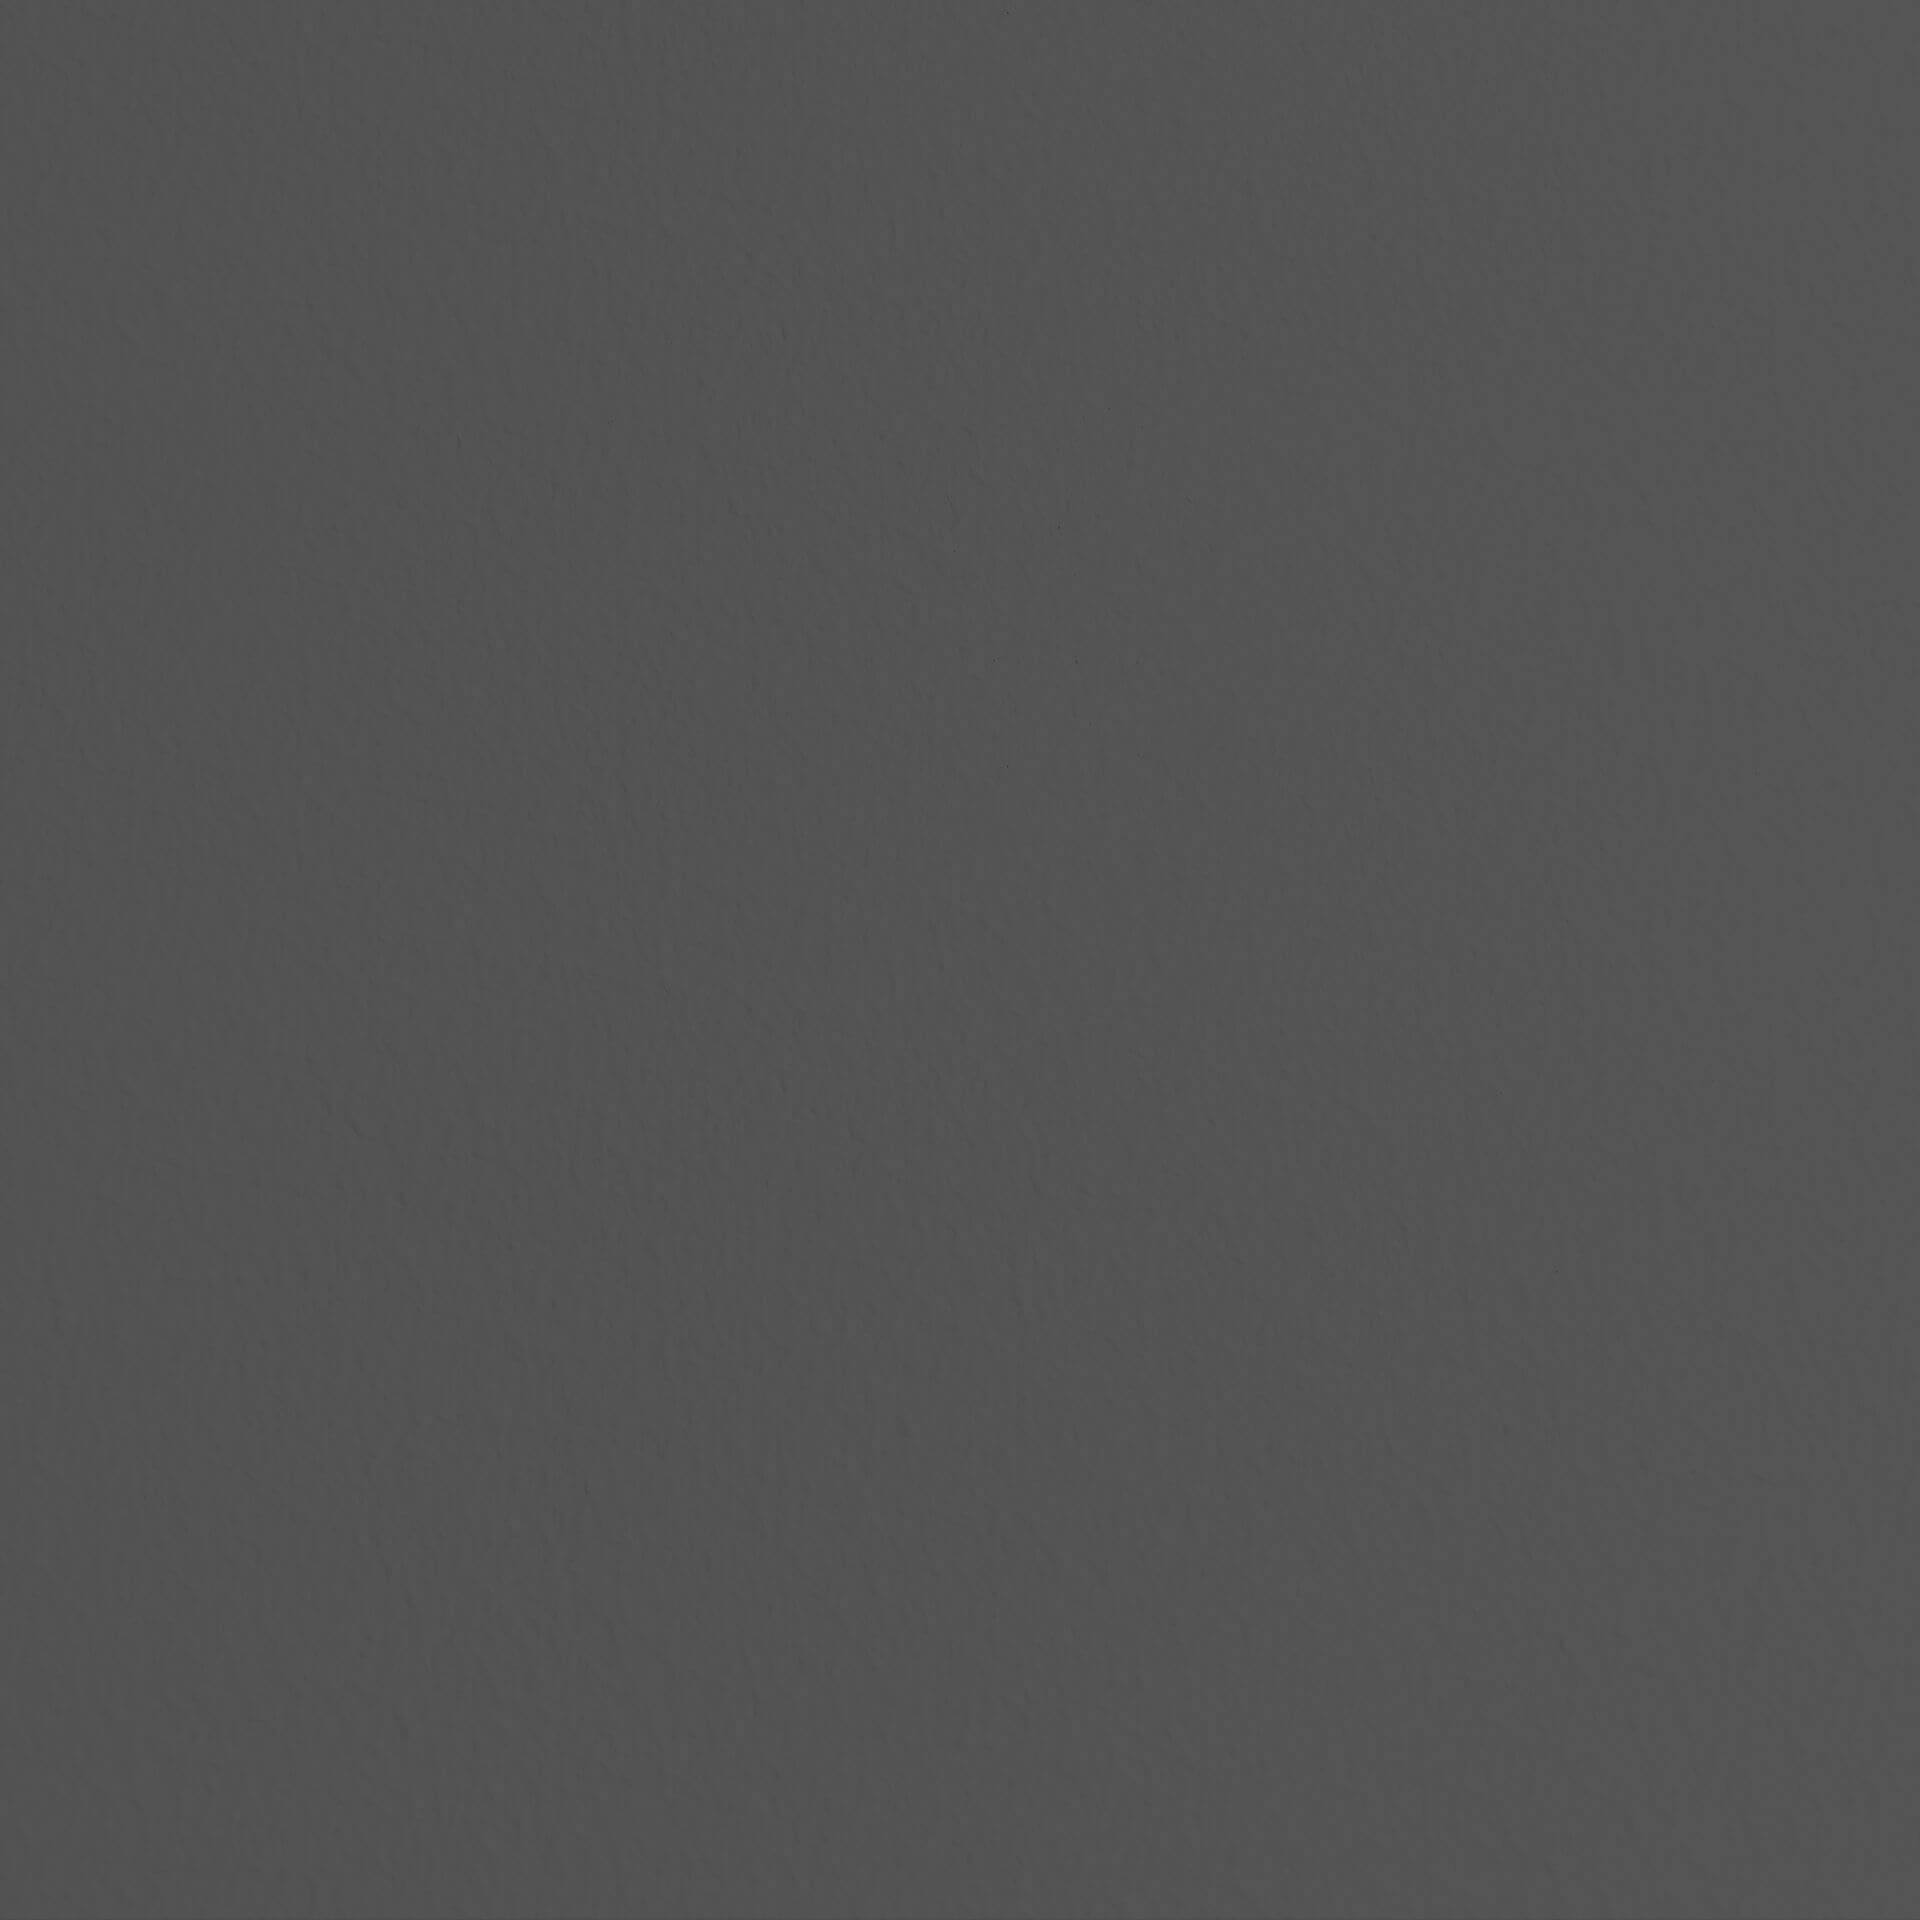 Mylands FTT 014 Iron Grey - Marble Matt Emulsion / Wandfarbe, 2.5L